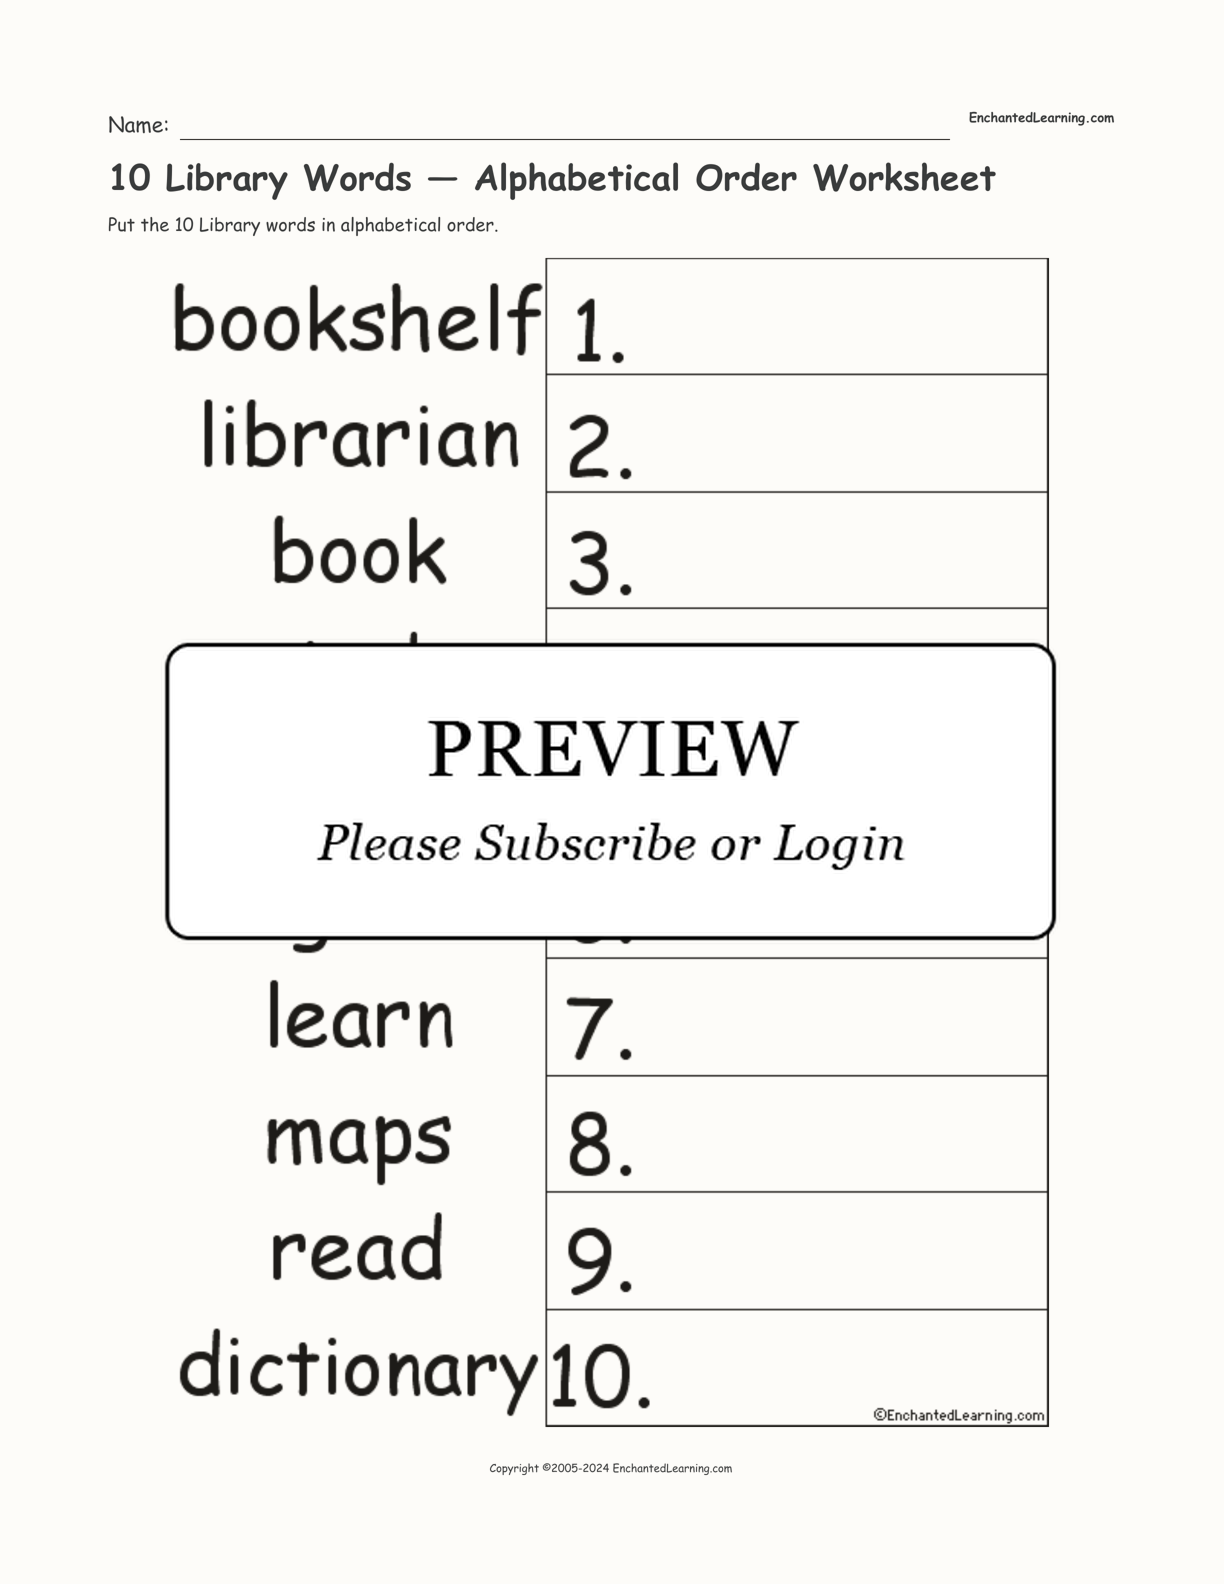 10 Library Words — Alphabetical Order Worksheet interactive worksheet page 1